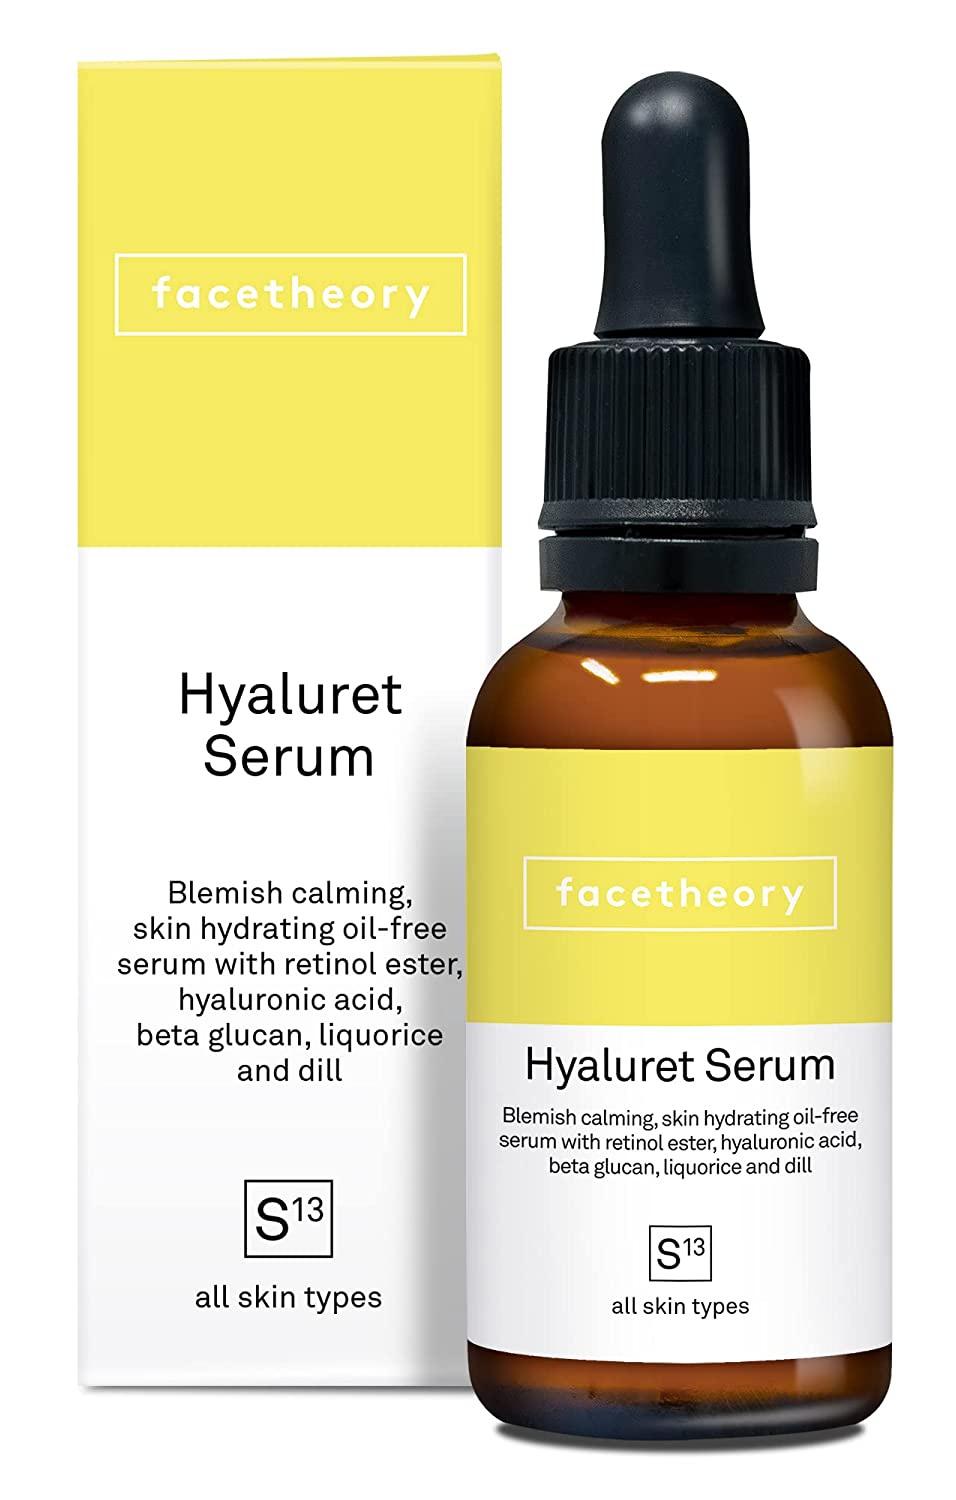 facetheory Hyaluret Serum S13